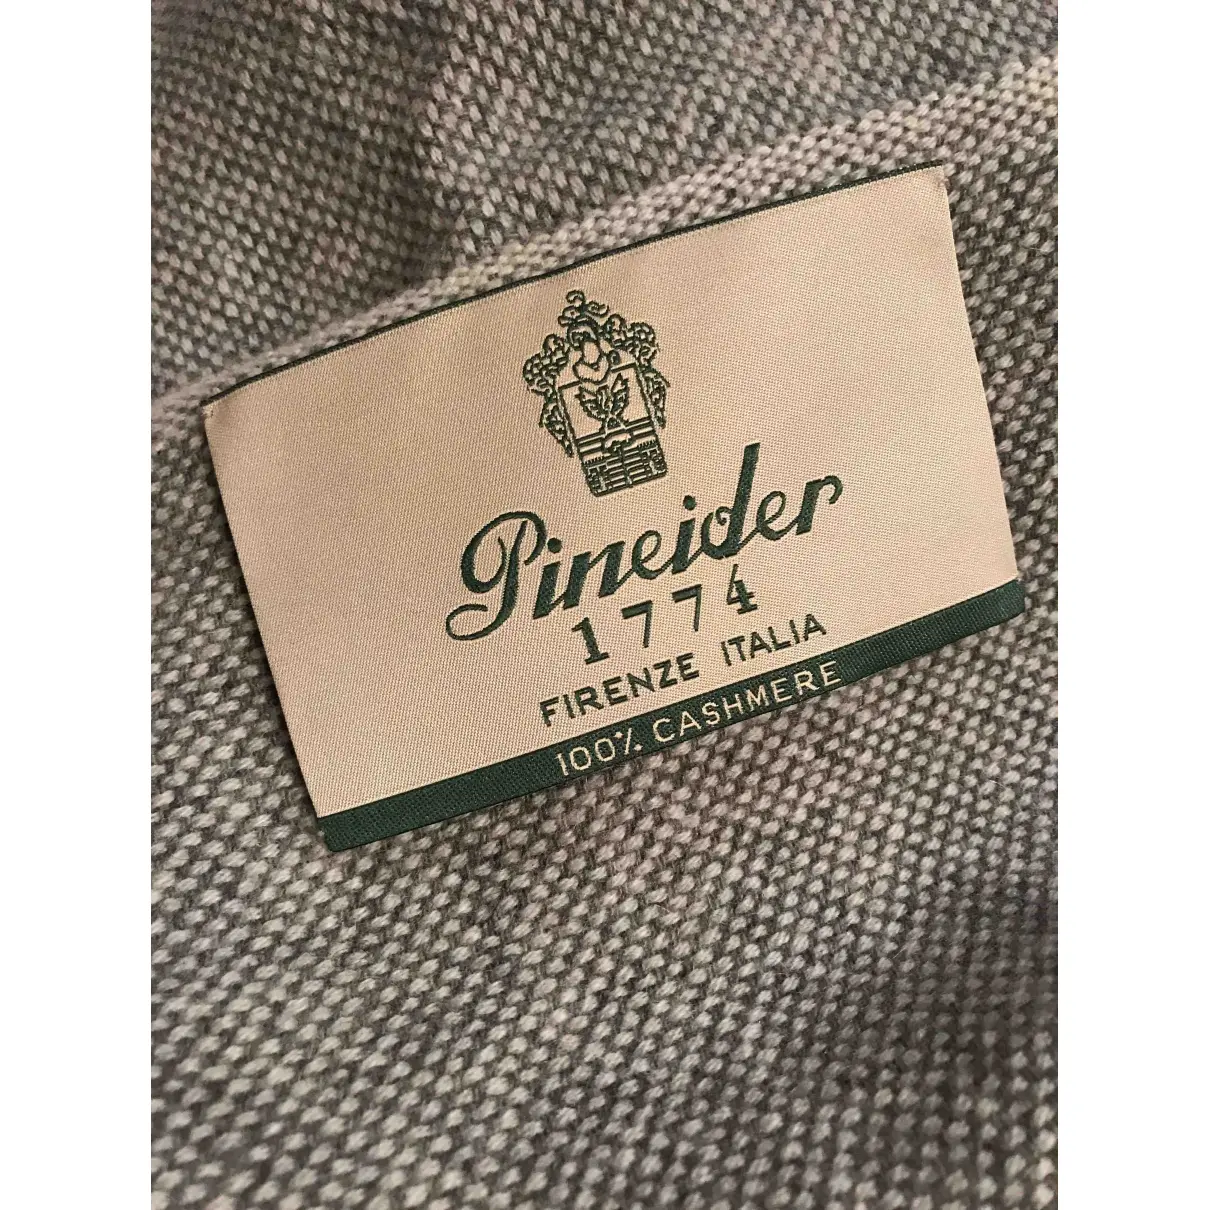 Buy Pineider Cashmere plaid online - Vintage